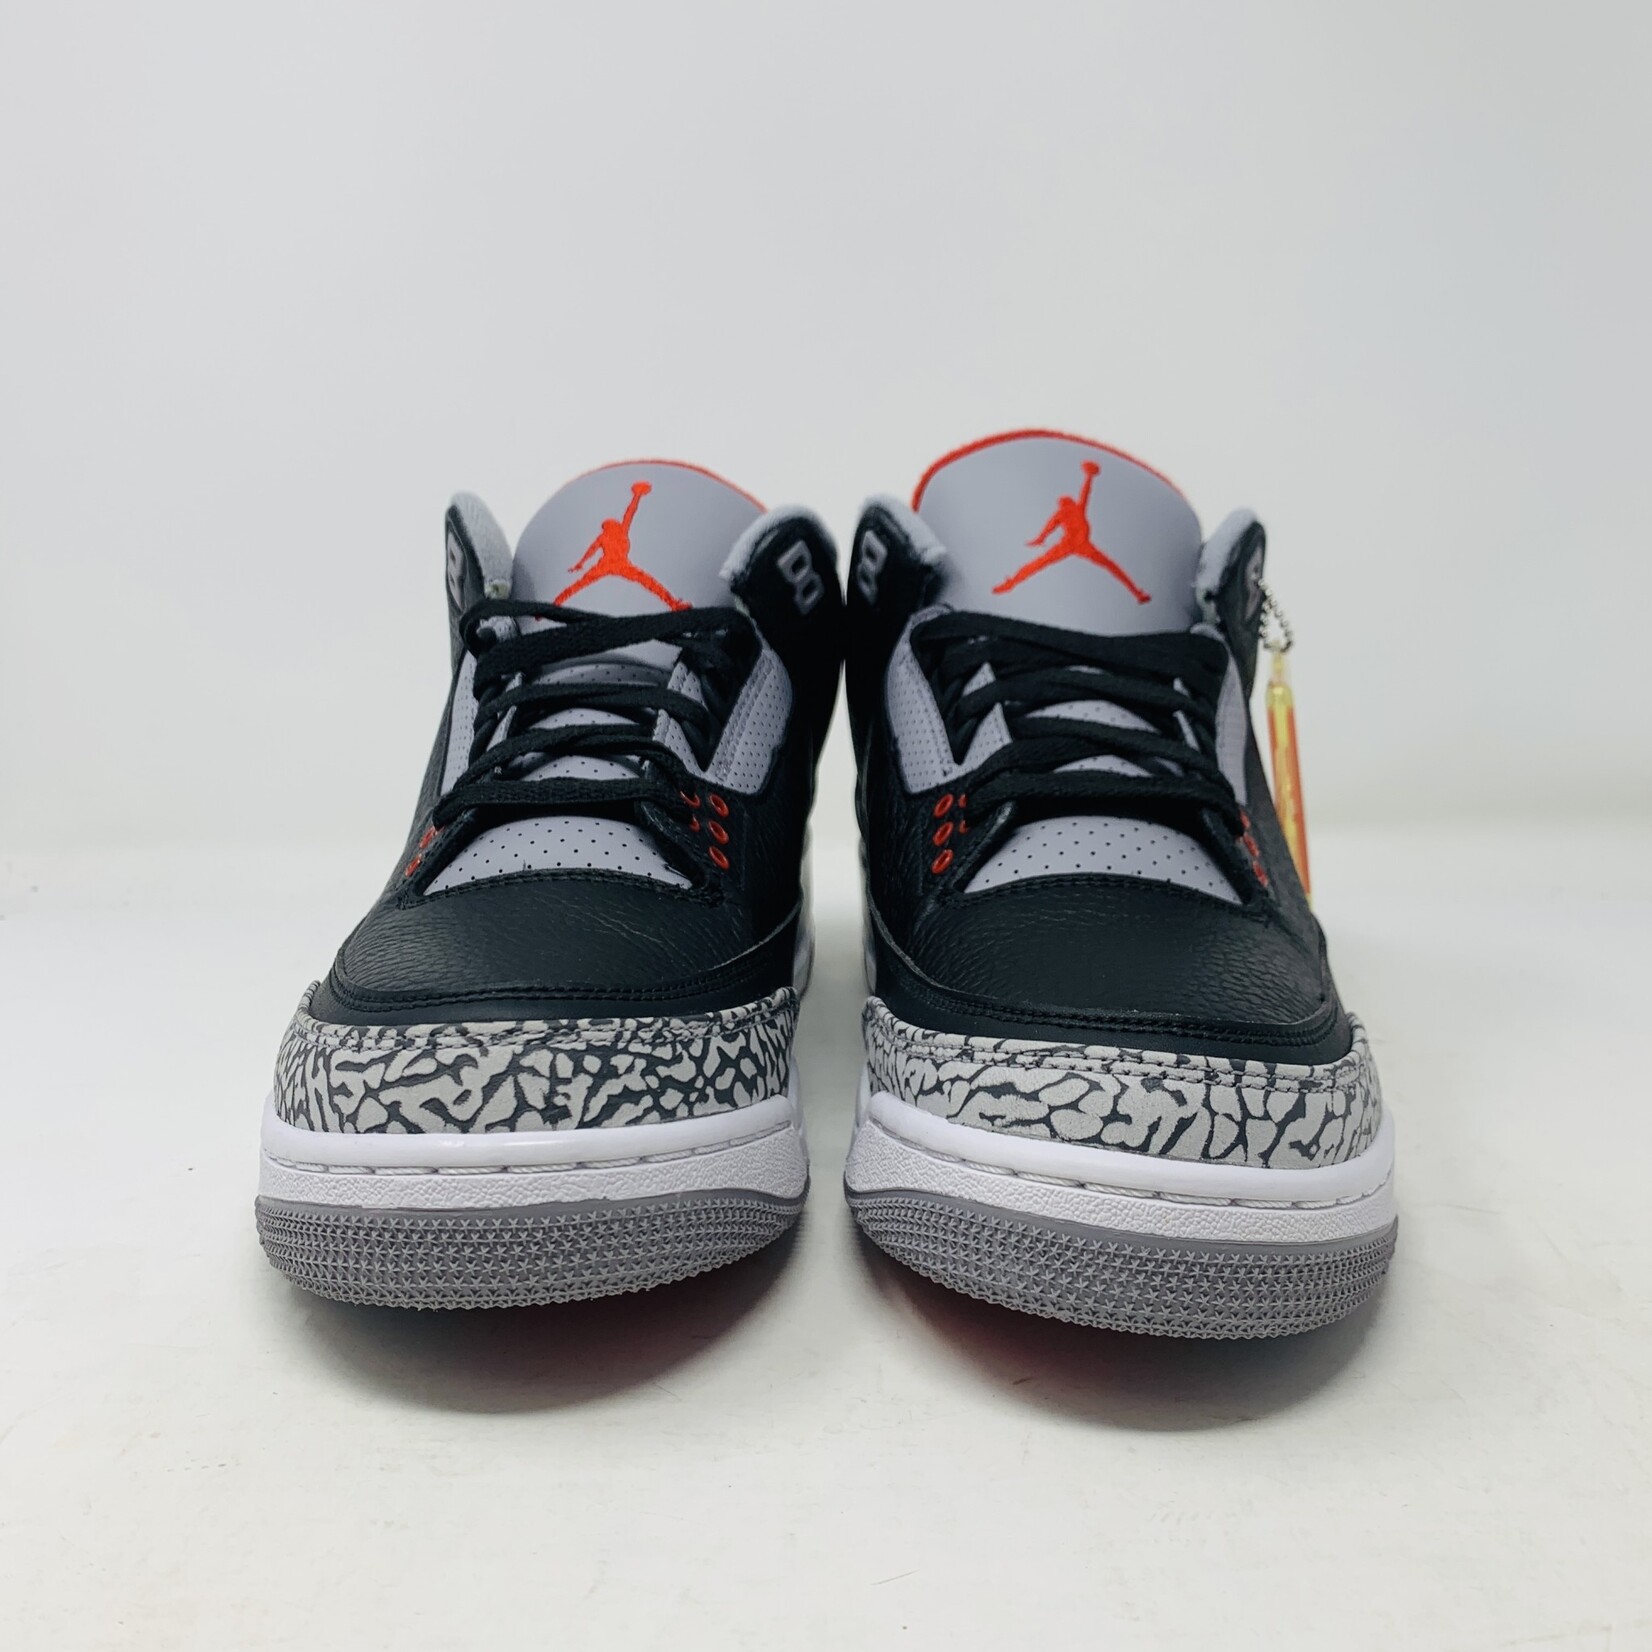 Jordan Jordan 3 Black Cement